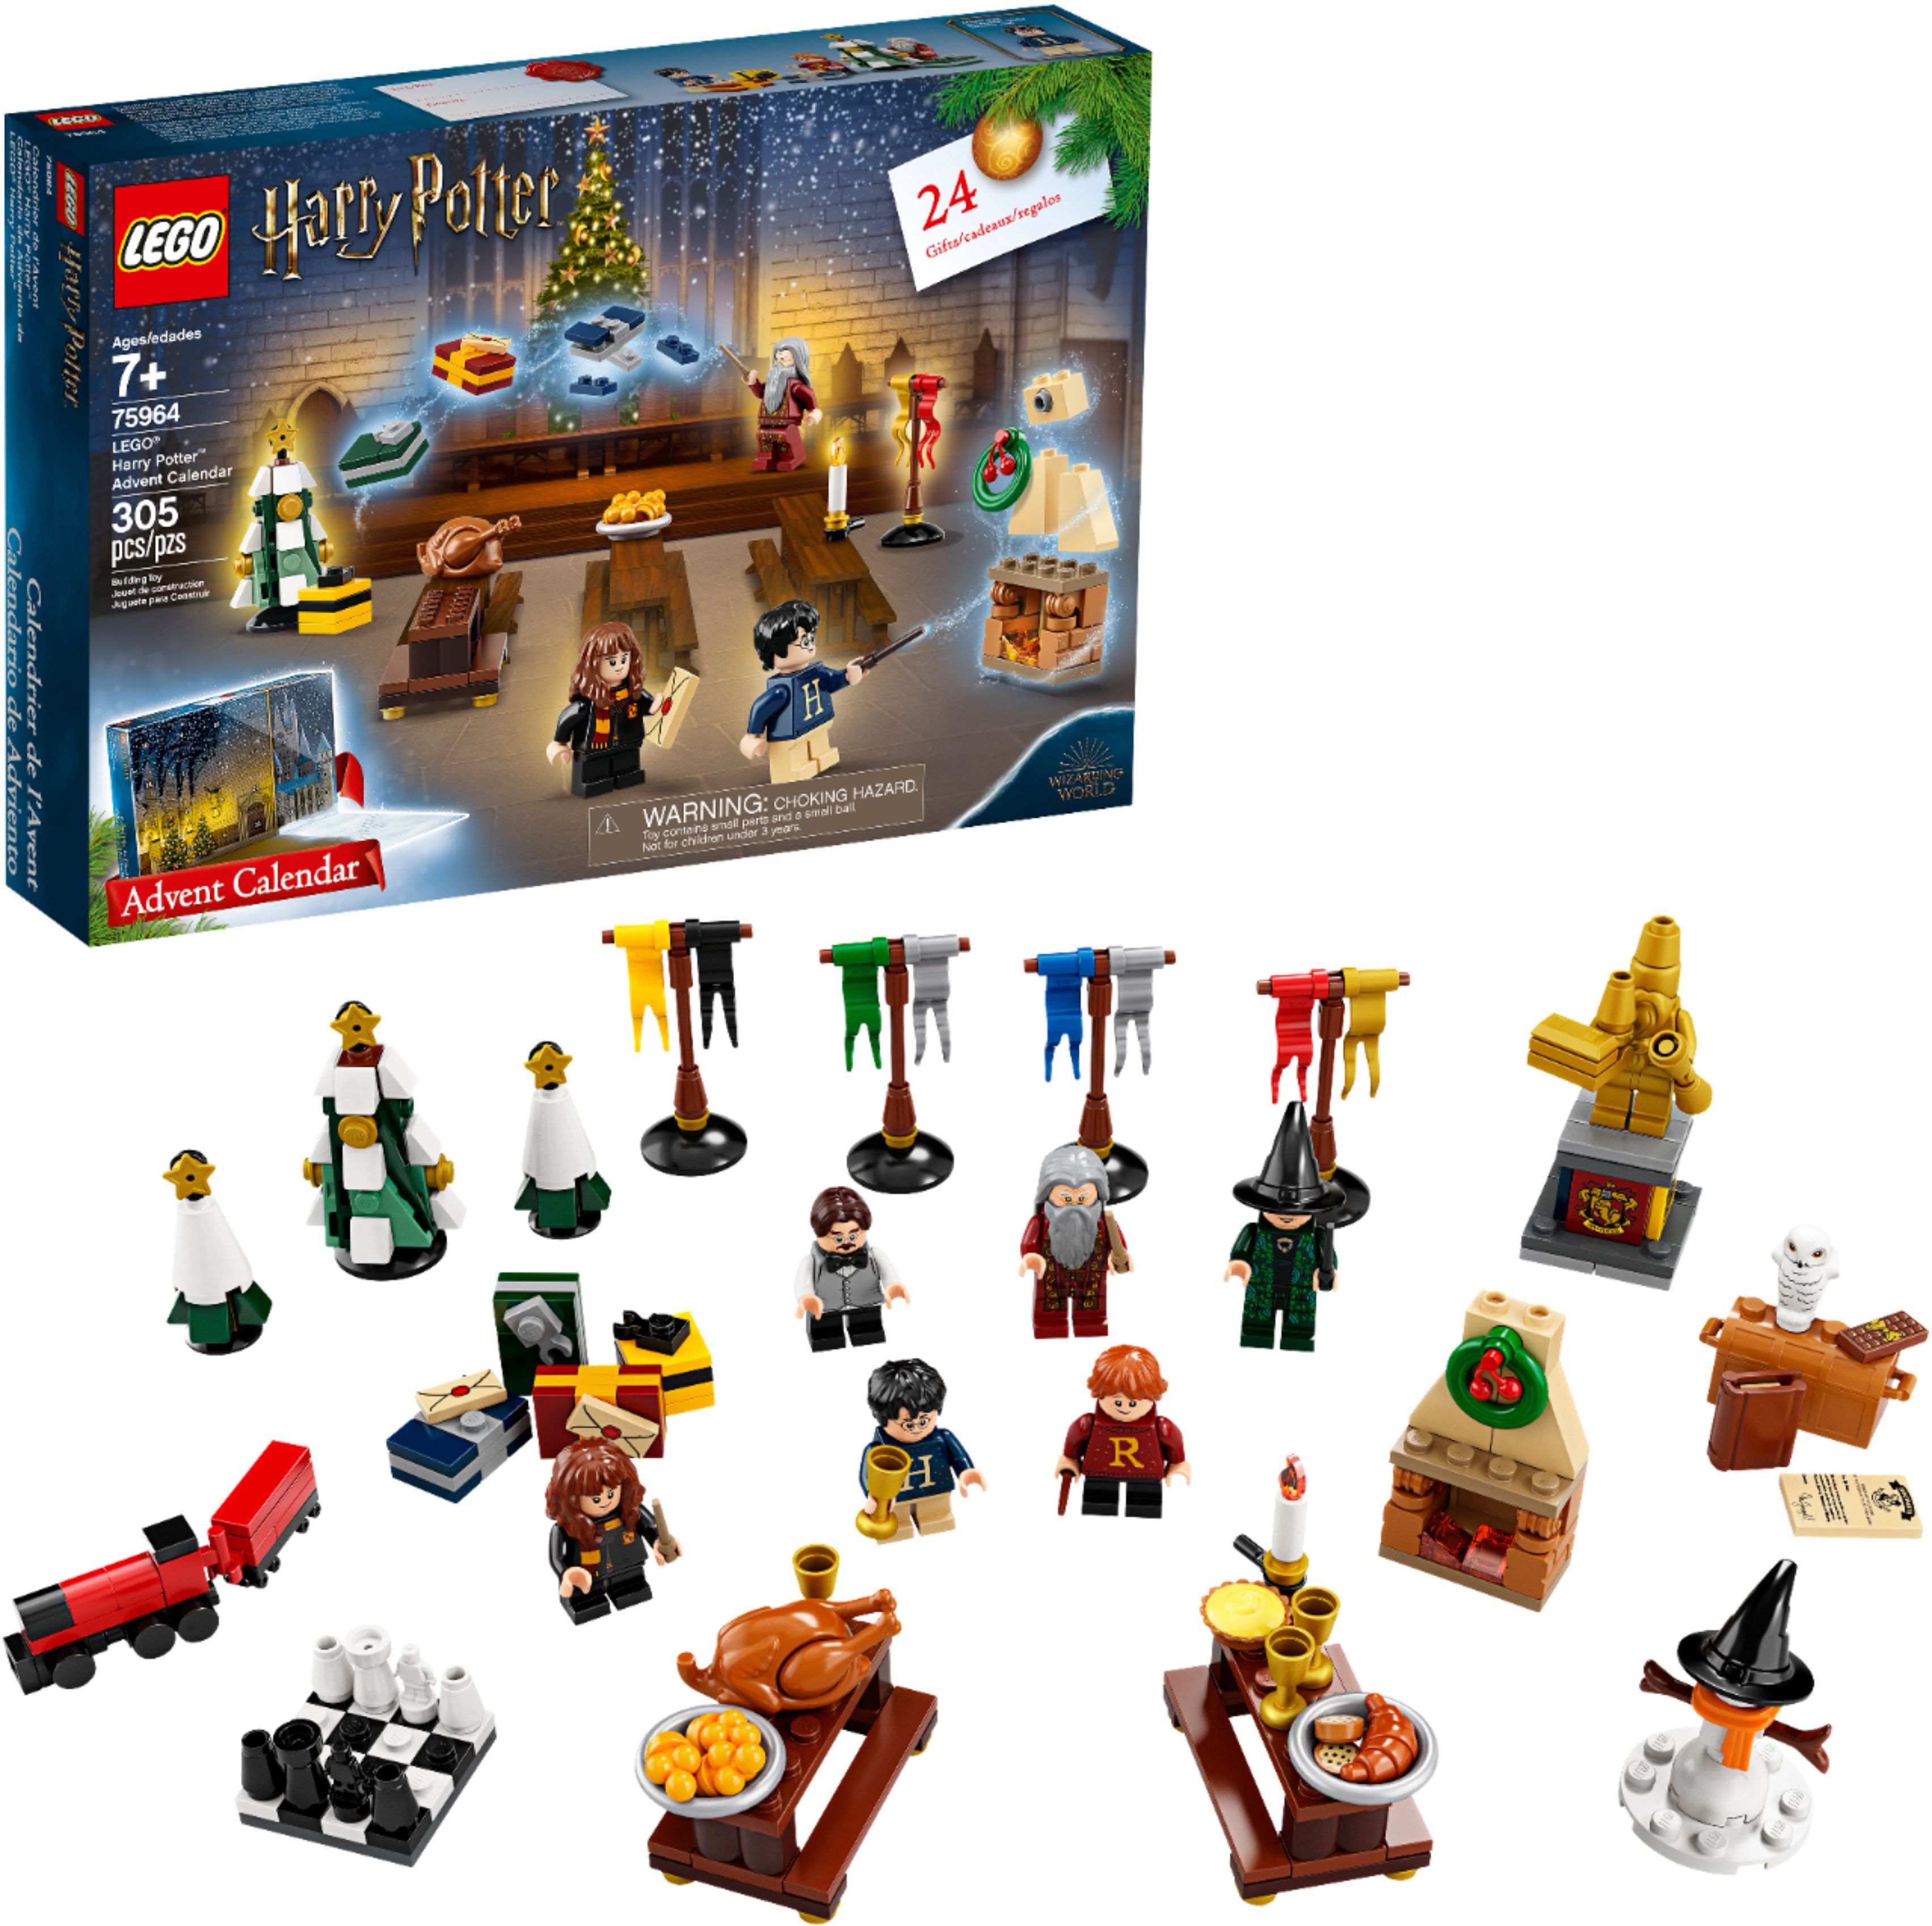 LEGO - Harry Potter Advent Calendar 75964 | eBay